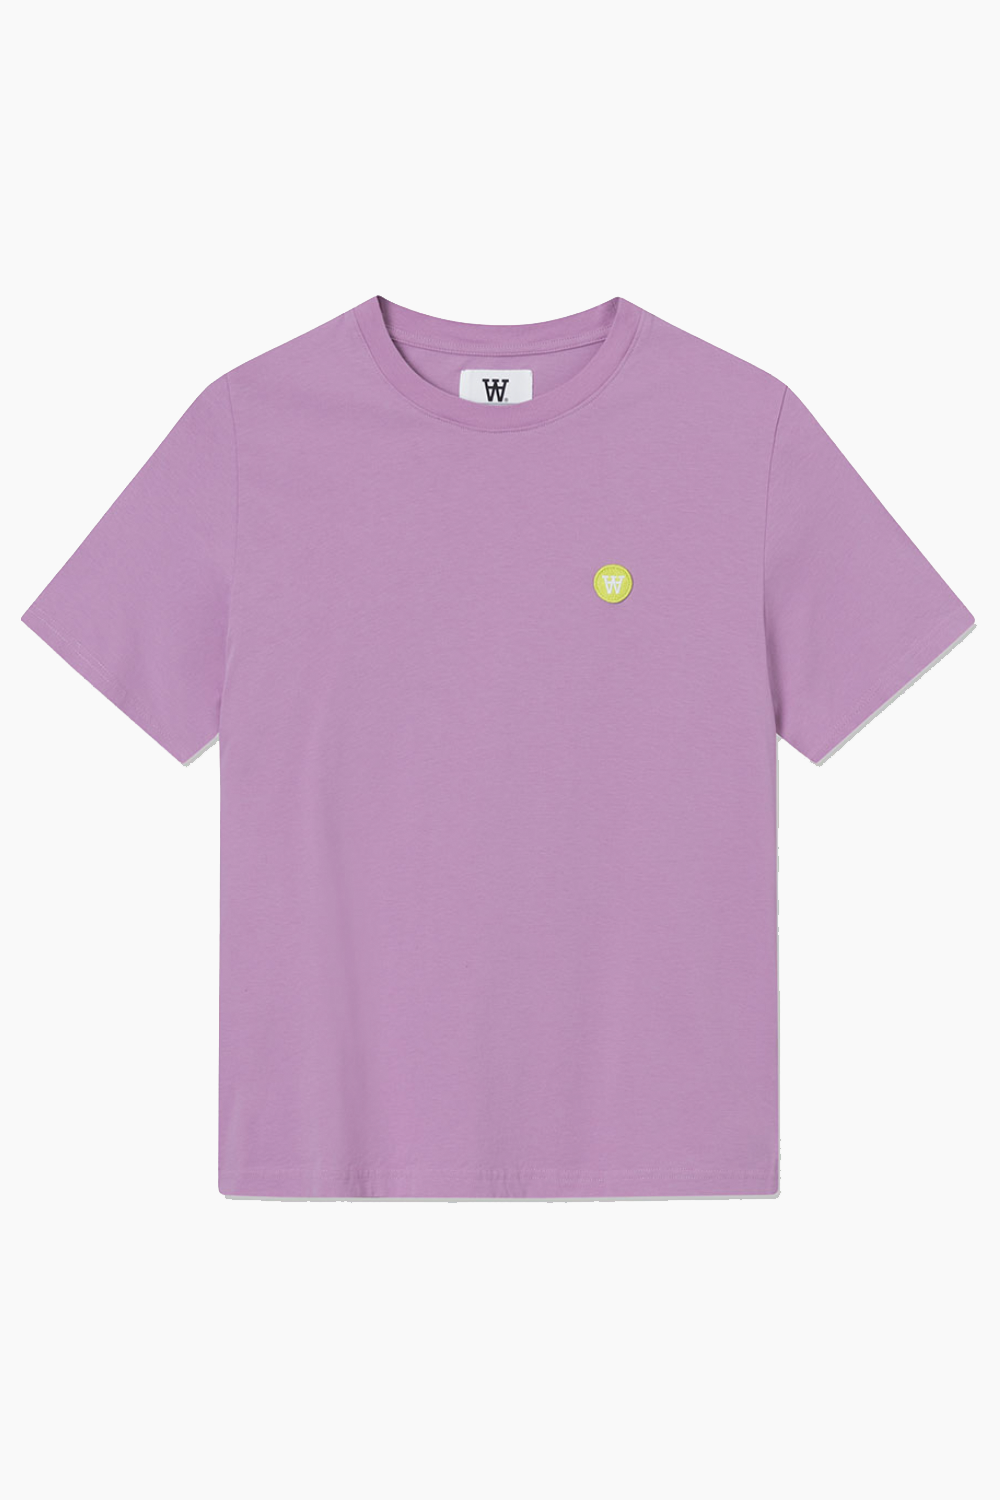 Mia T-shirt - Rosy Lavender - Wood Wood